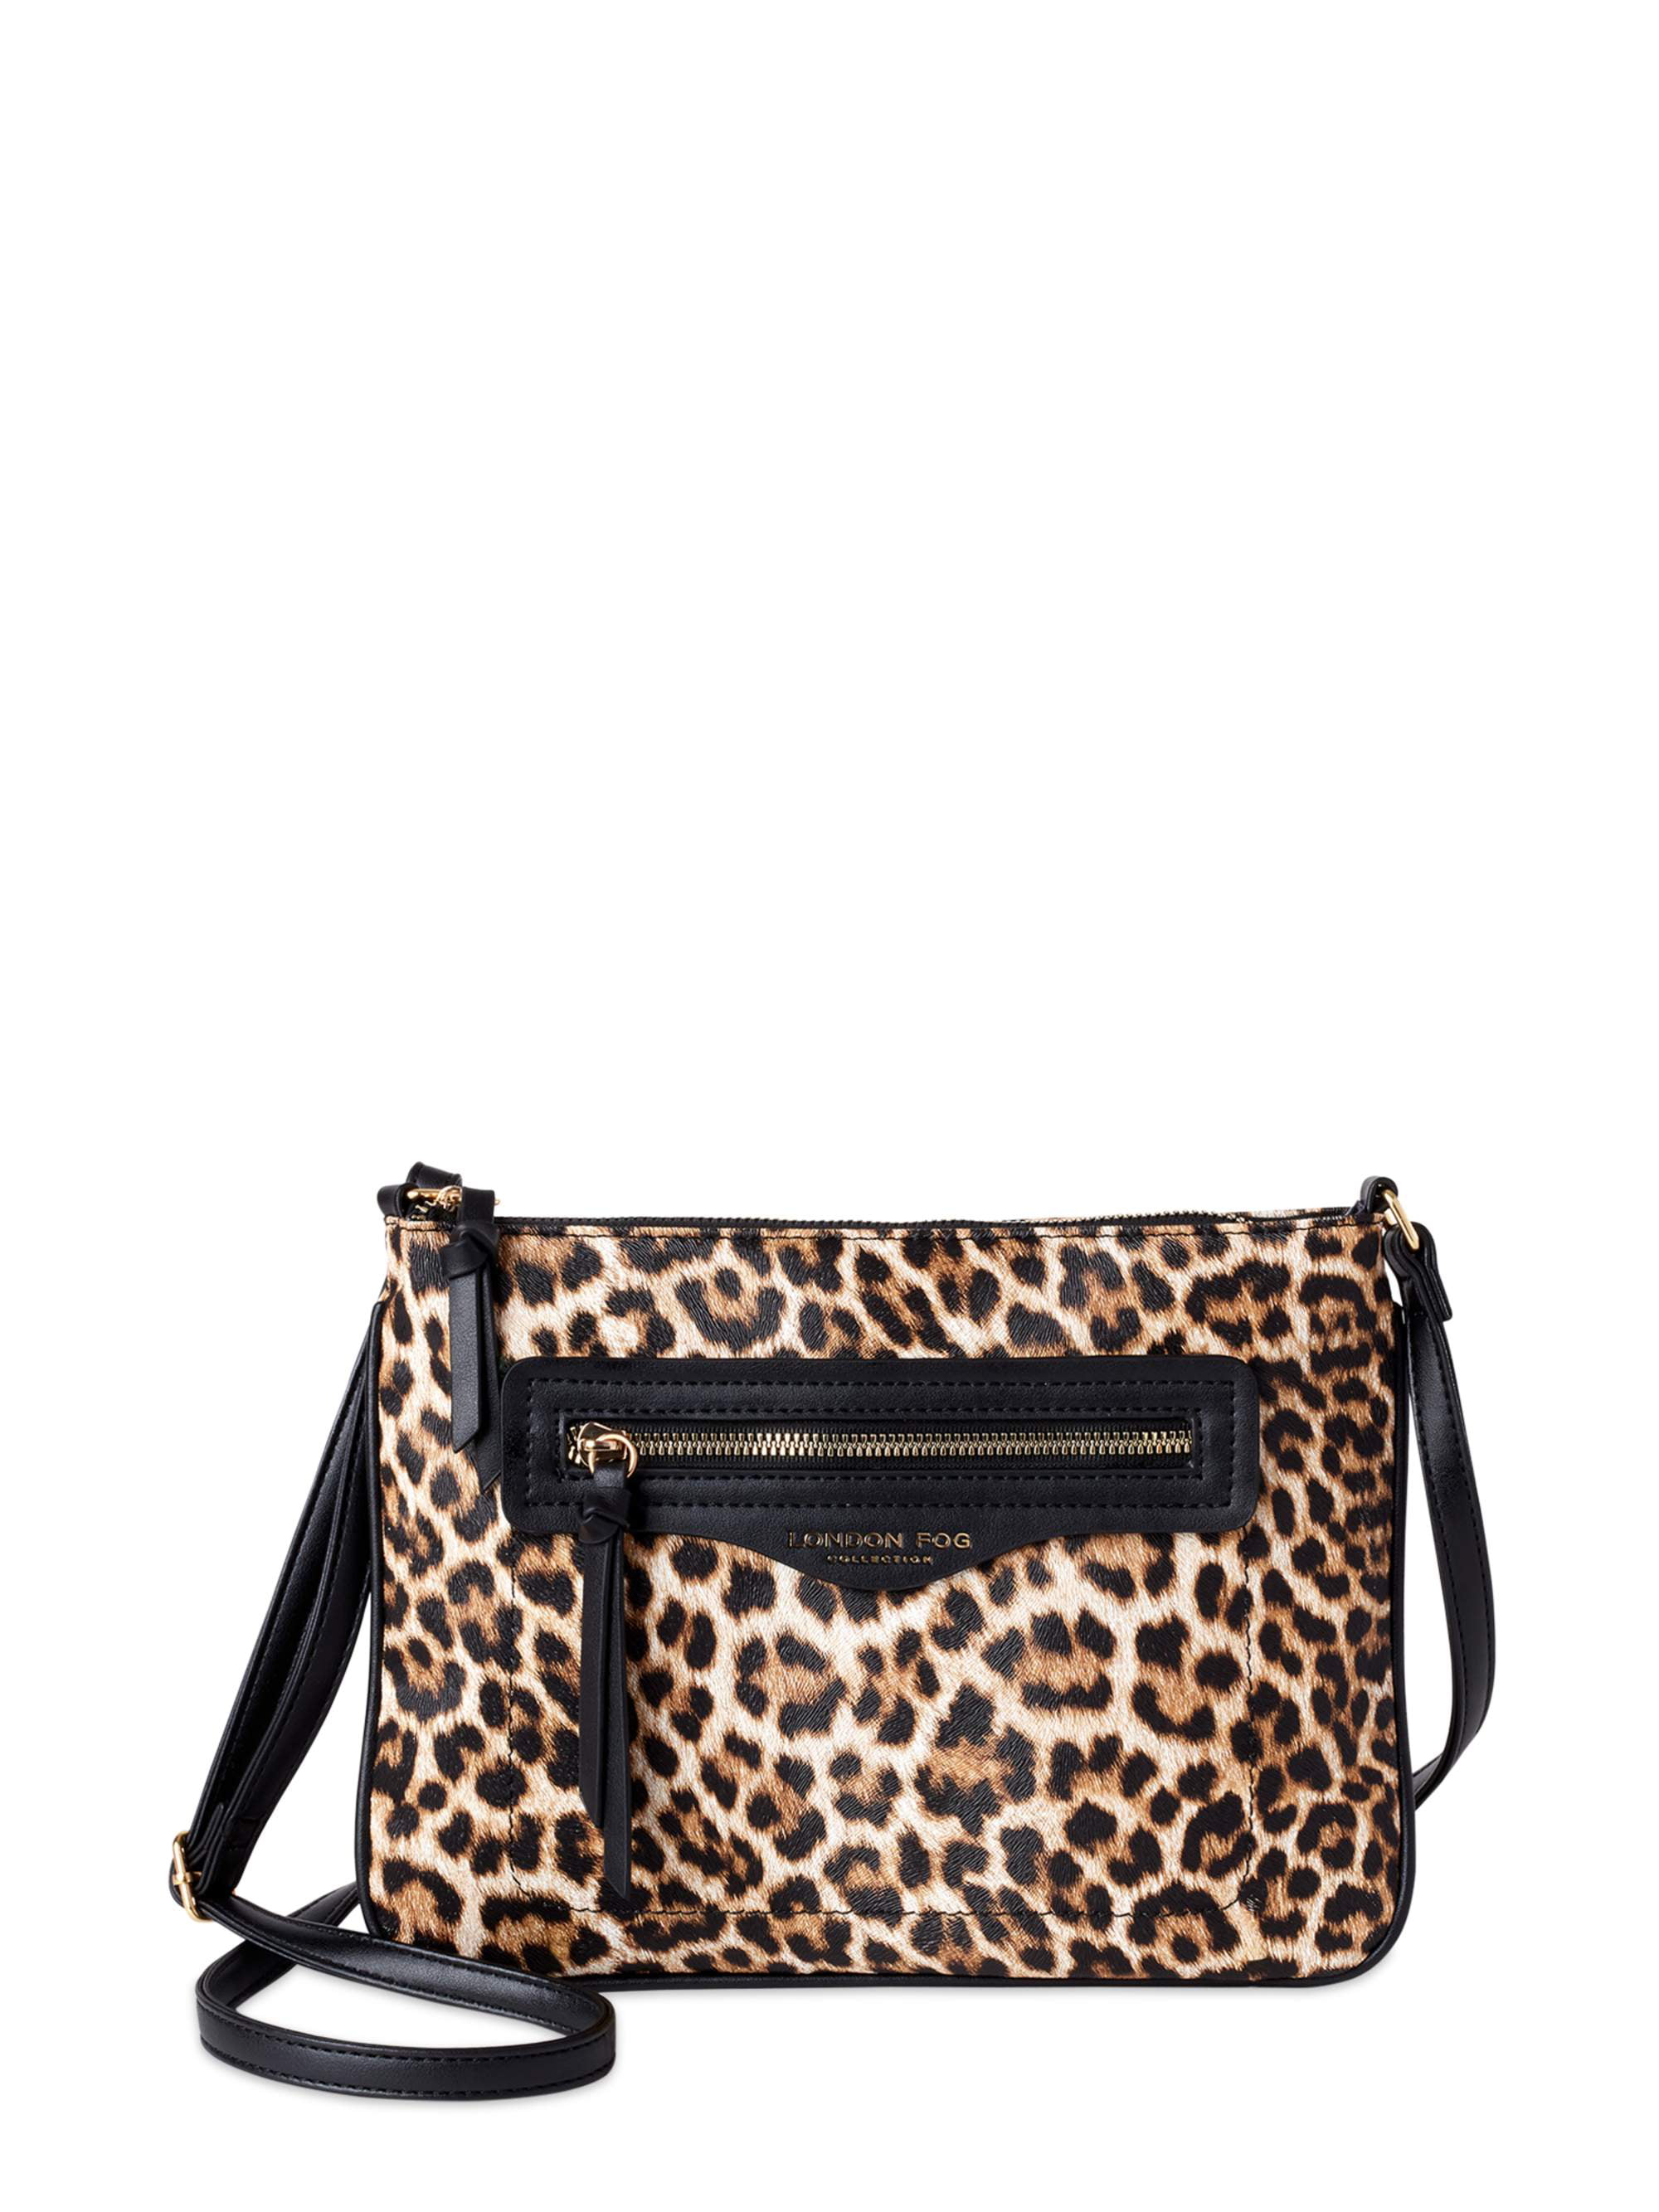 London Fog Daisy Crossbody Bag, Leopard Print - Walmart.com